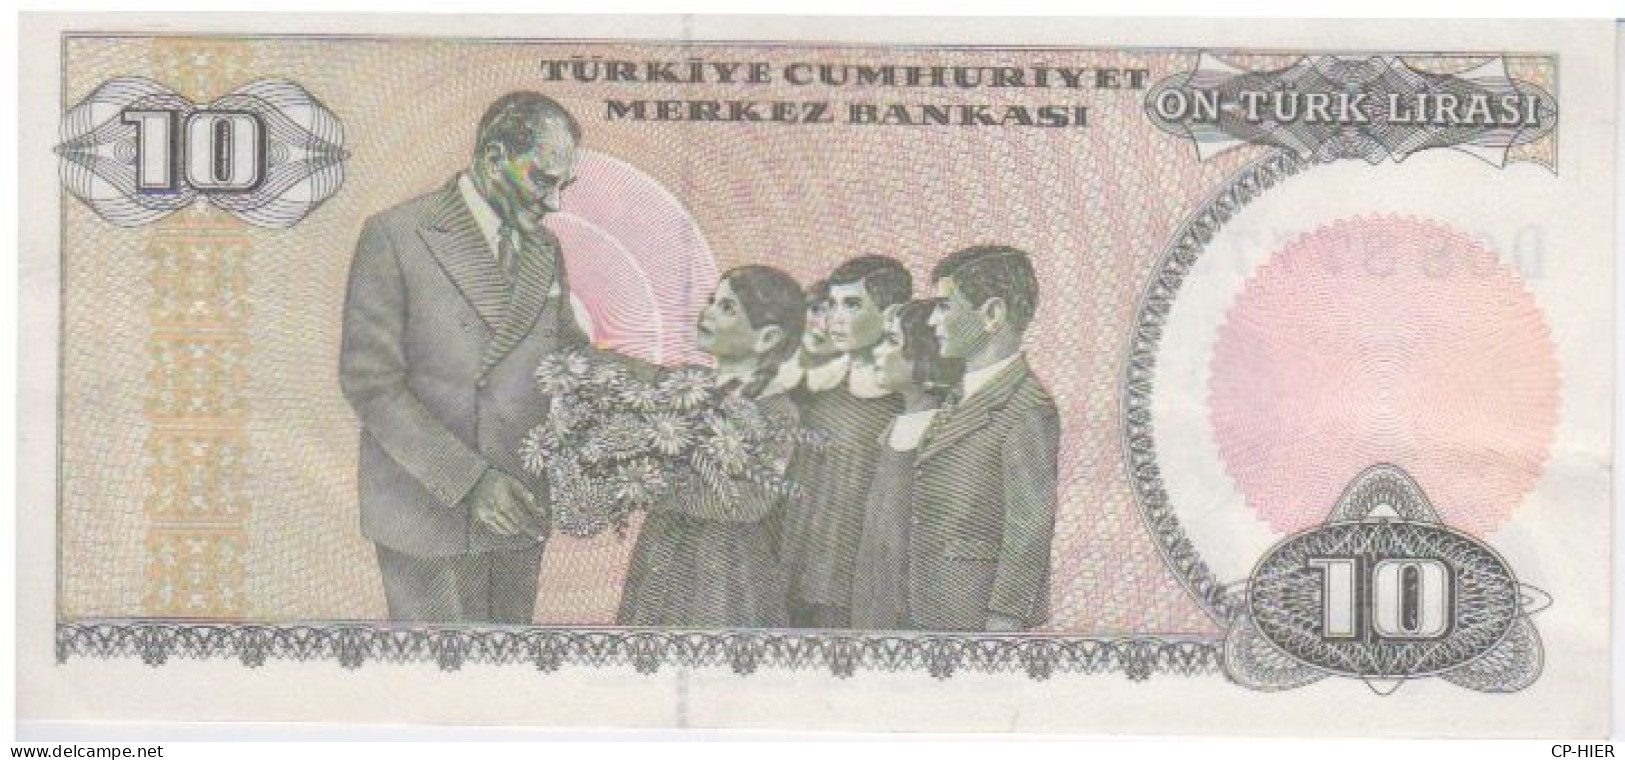 BILLET TURC - TURQUIE - TÜRKIYE -  ON TURK LIRASI 10 - Turquie